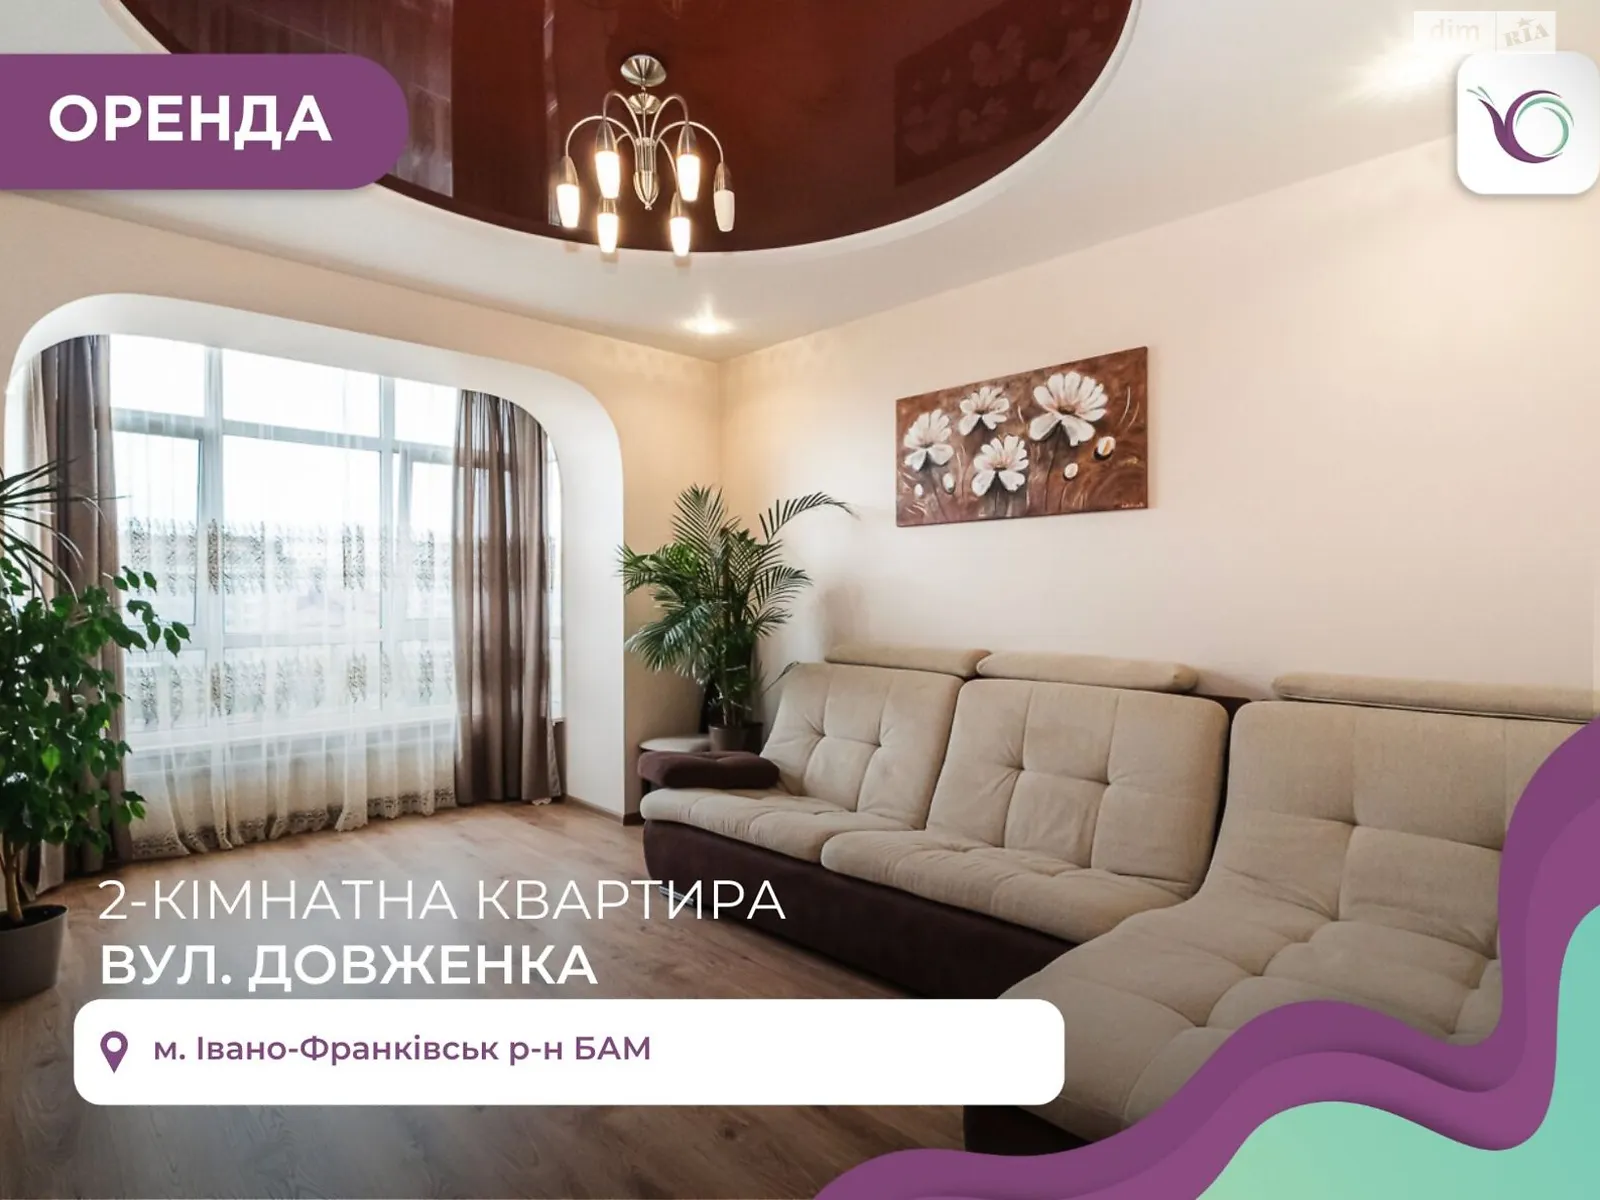 Сдается в аренду 2-комнатная квартира 57 кв. м в Ивано-Франковске, ул. Довженко А. - фото 1